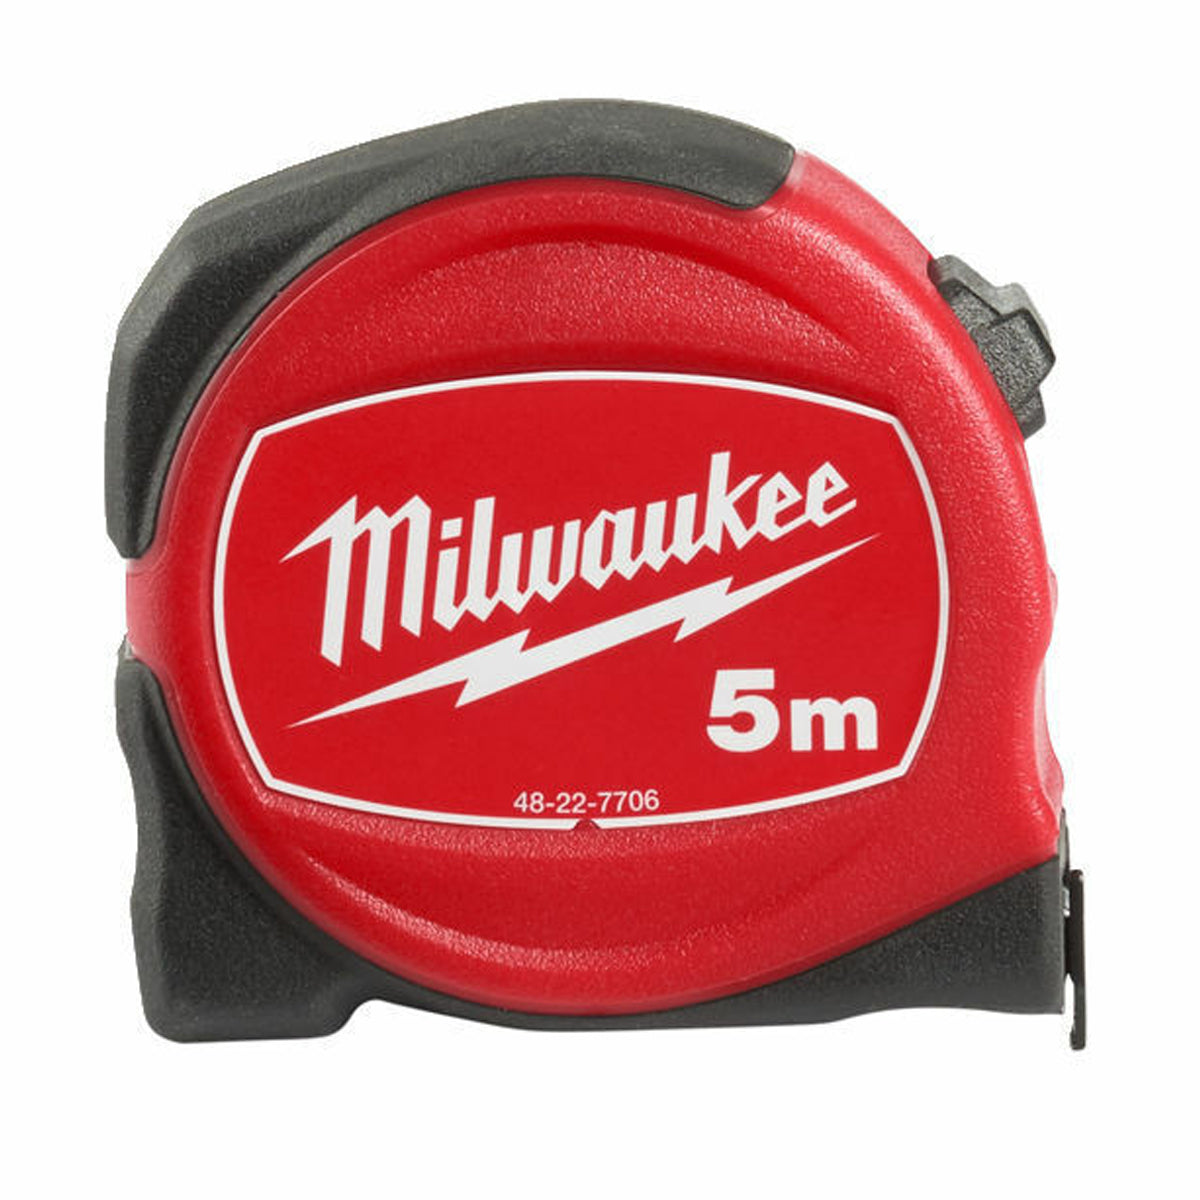 Milwaukee S5/25 5m Compact Tape Measure 48227706